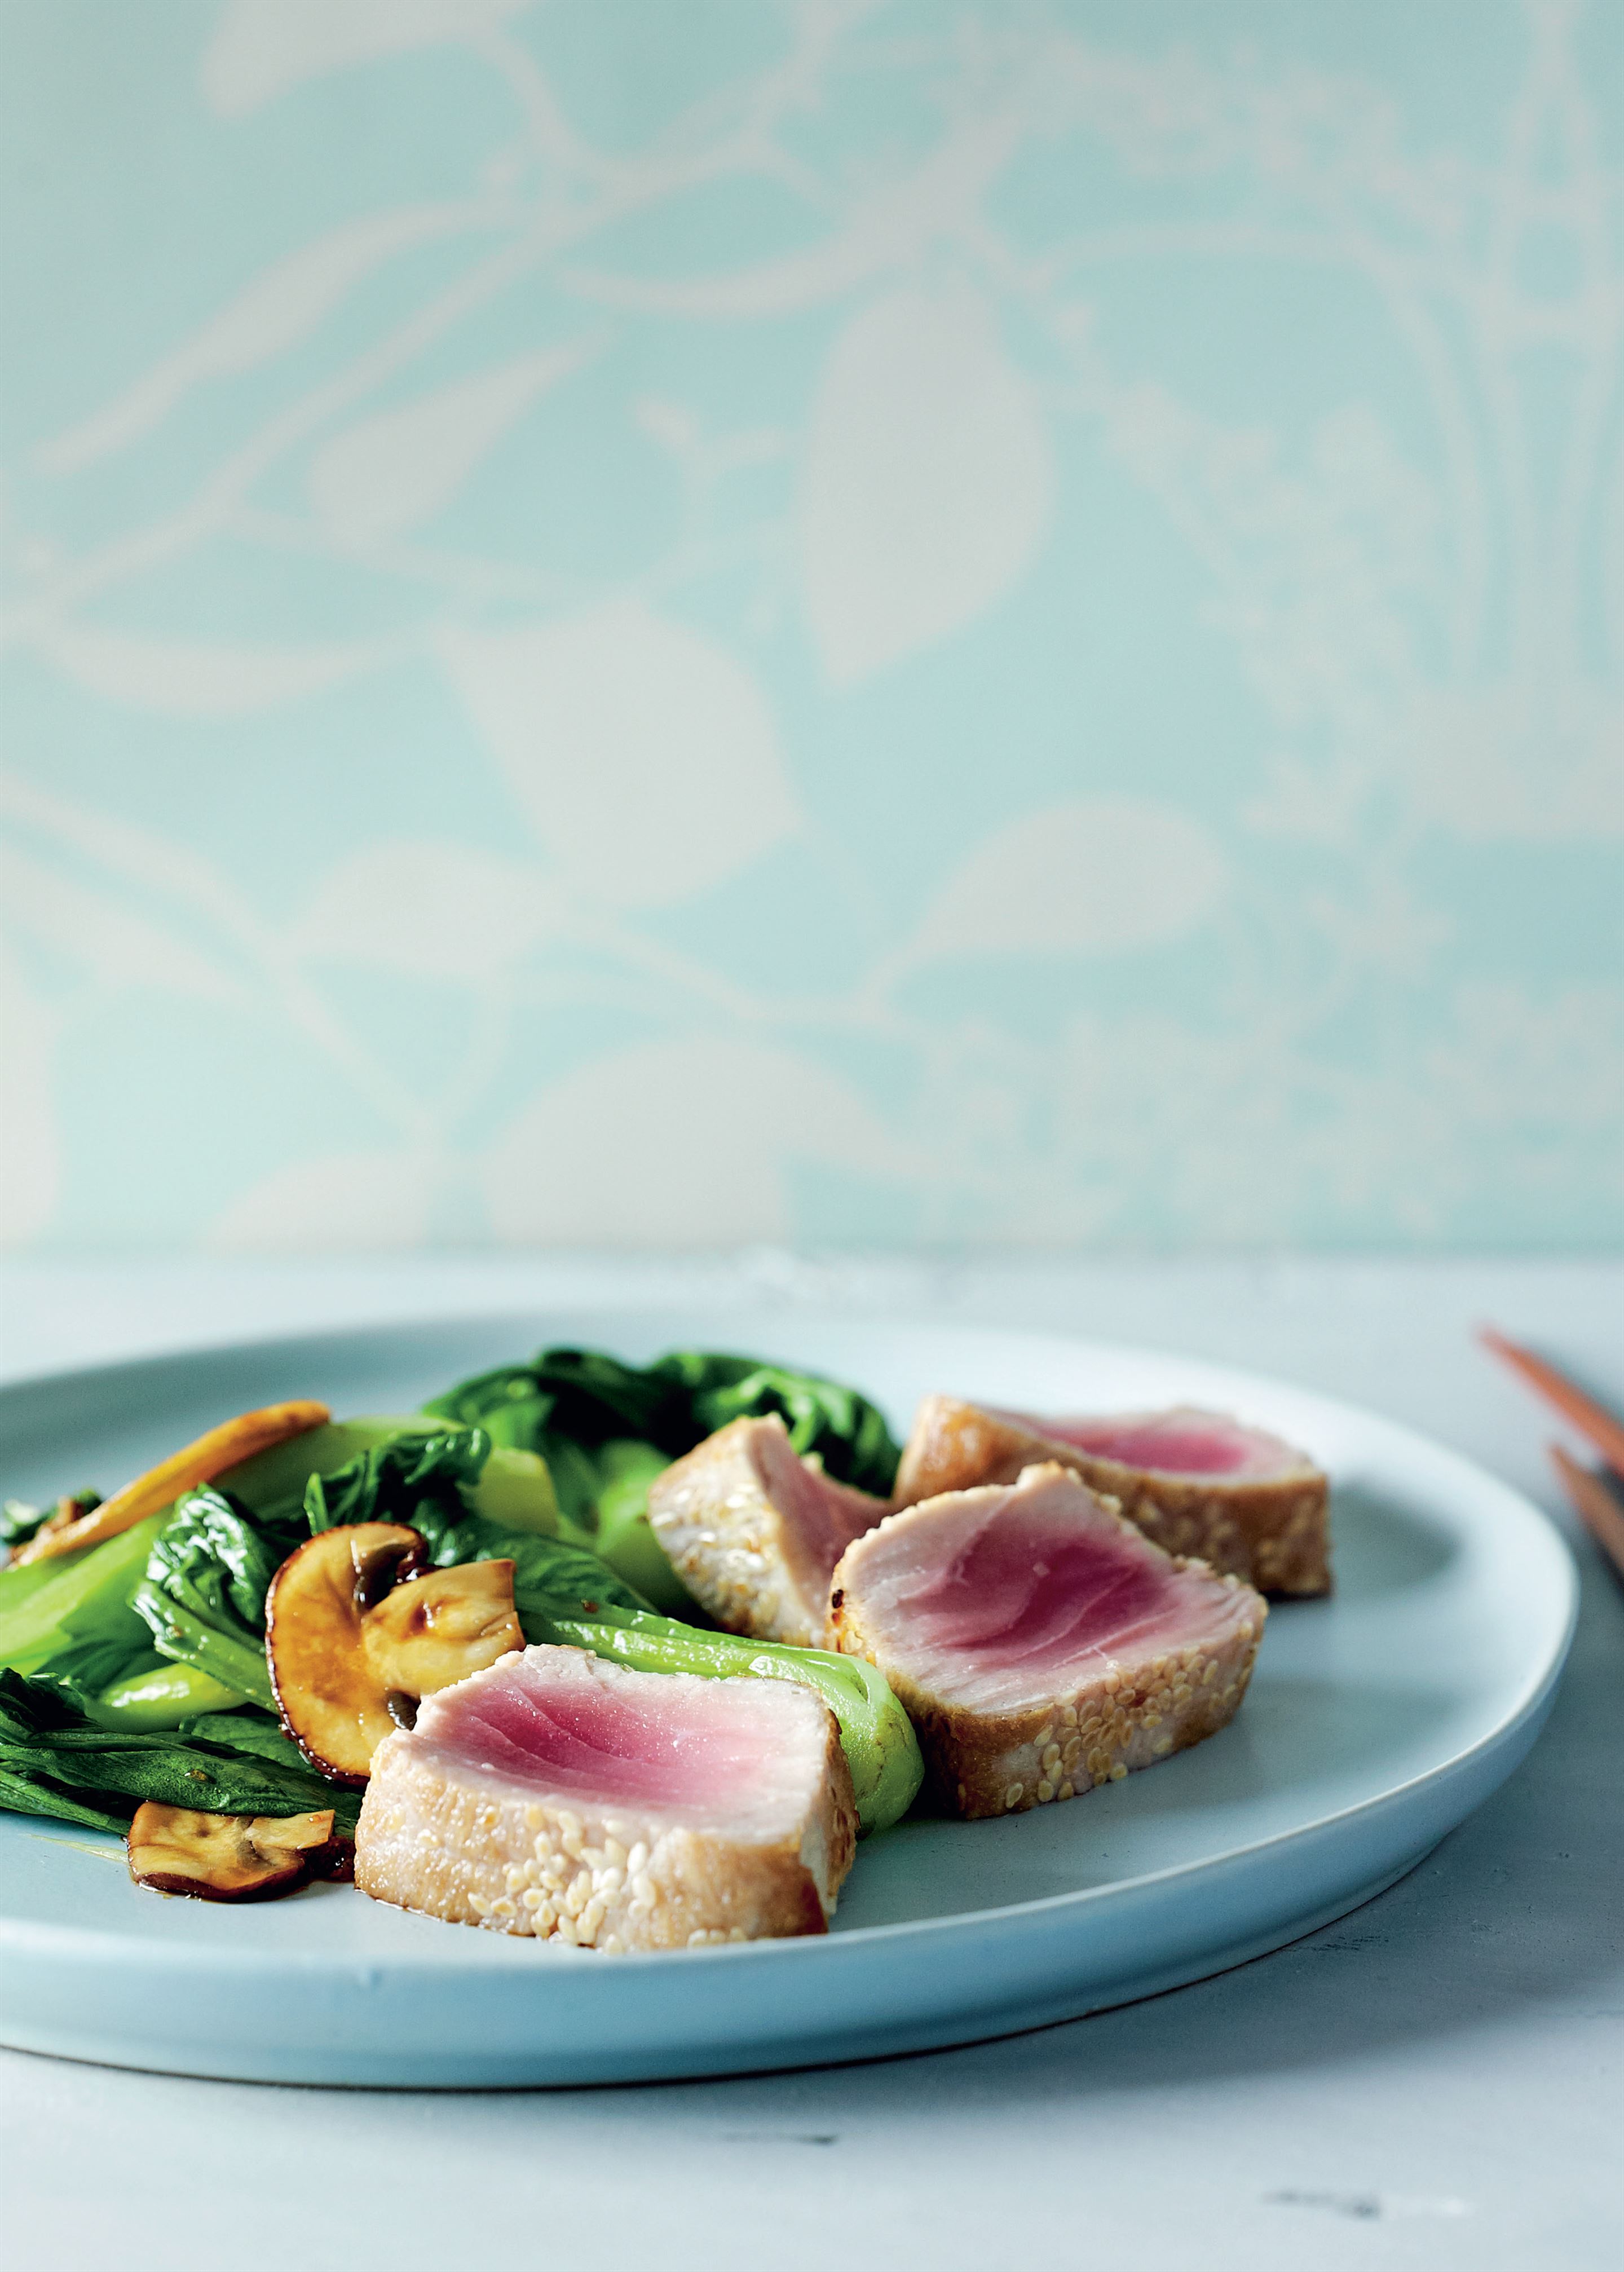 Seared tuna with stir-fried Asian greens